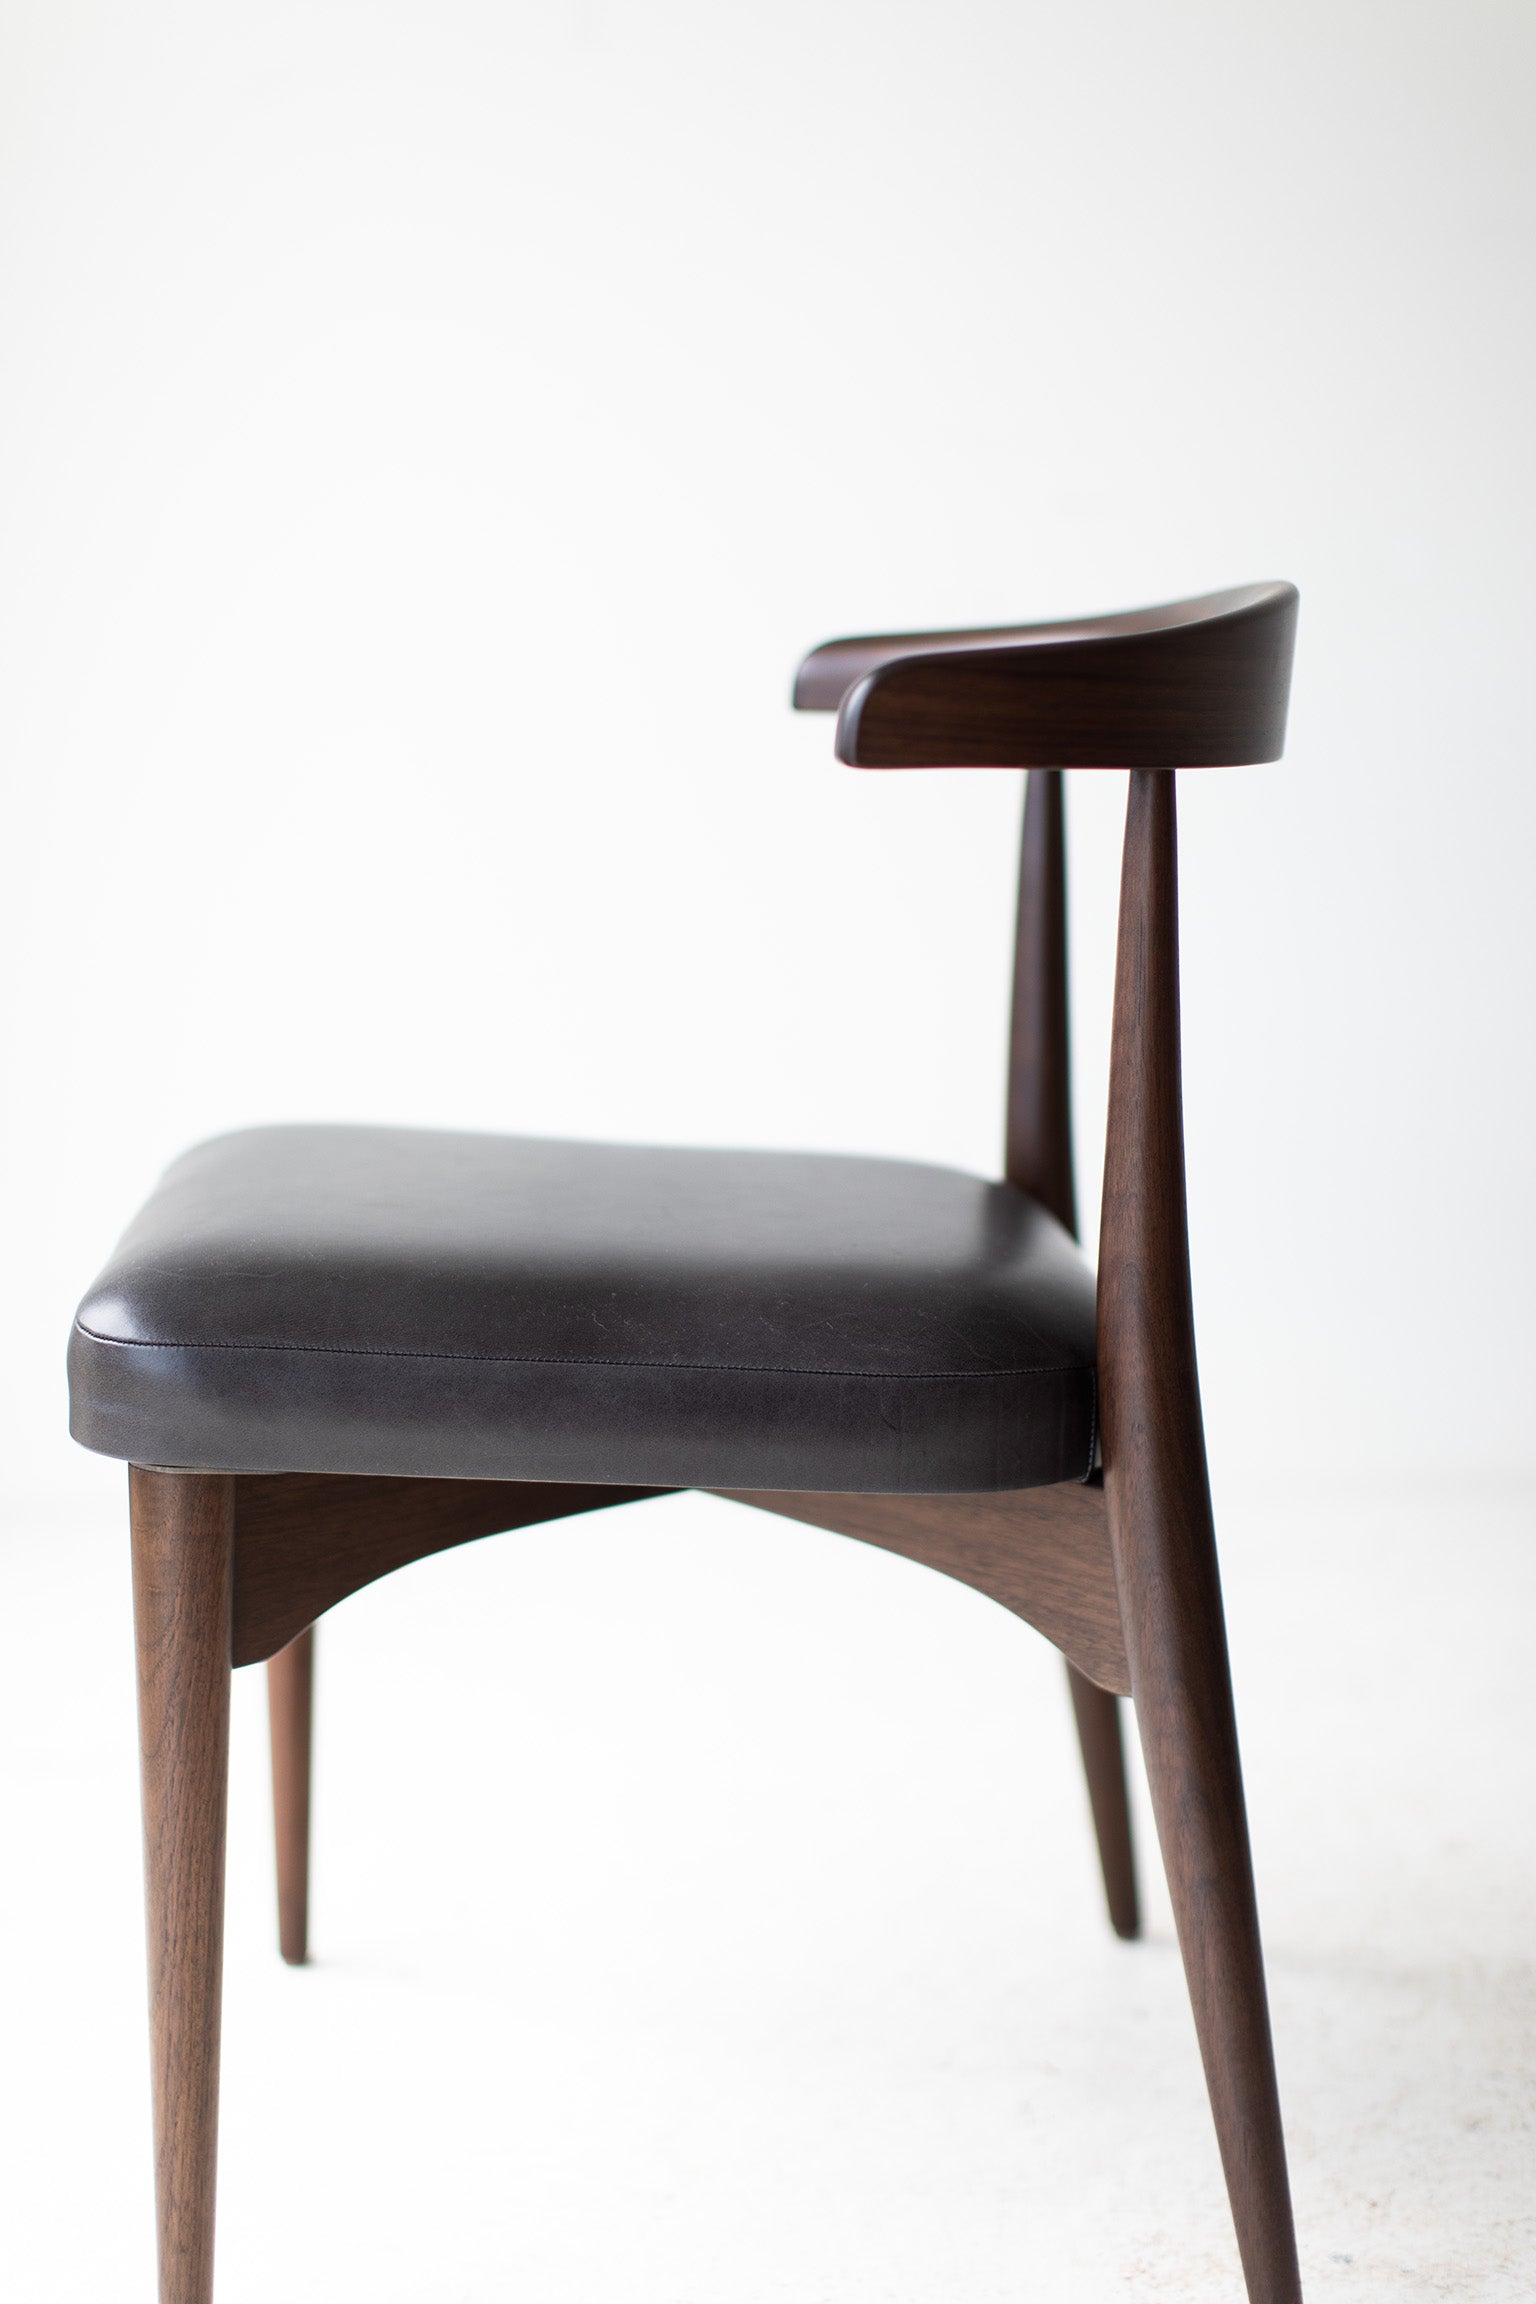      peabody-modern-wood-dining-chair-1707-05